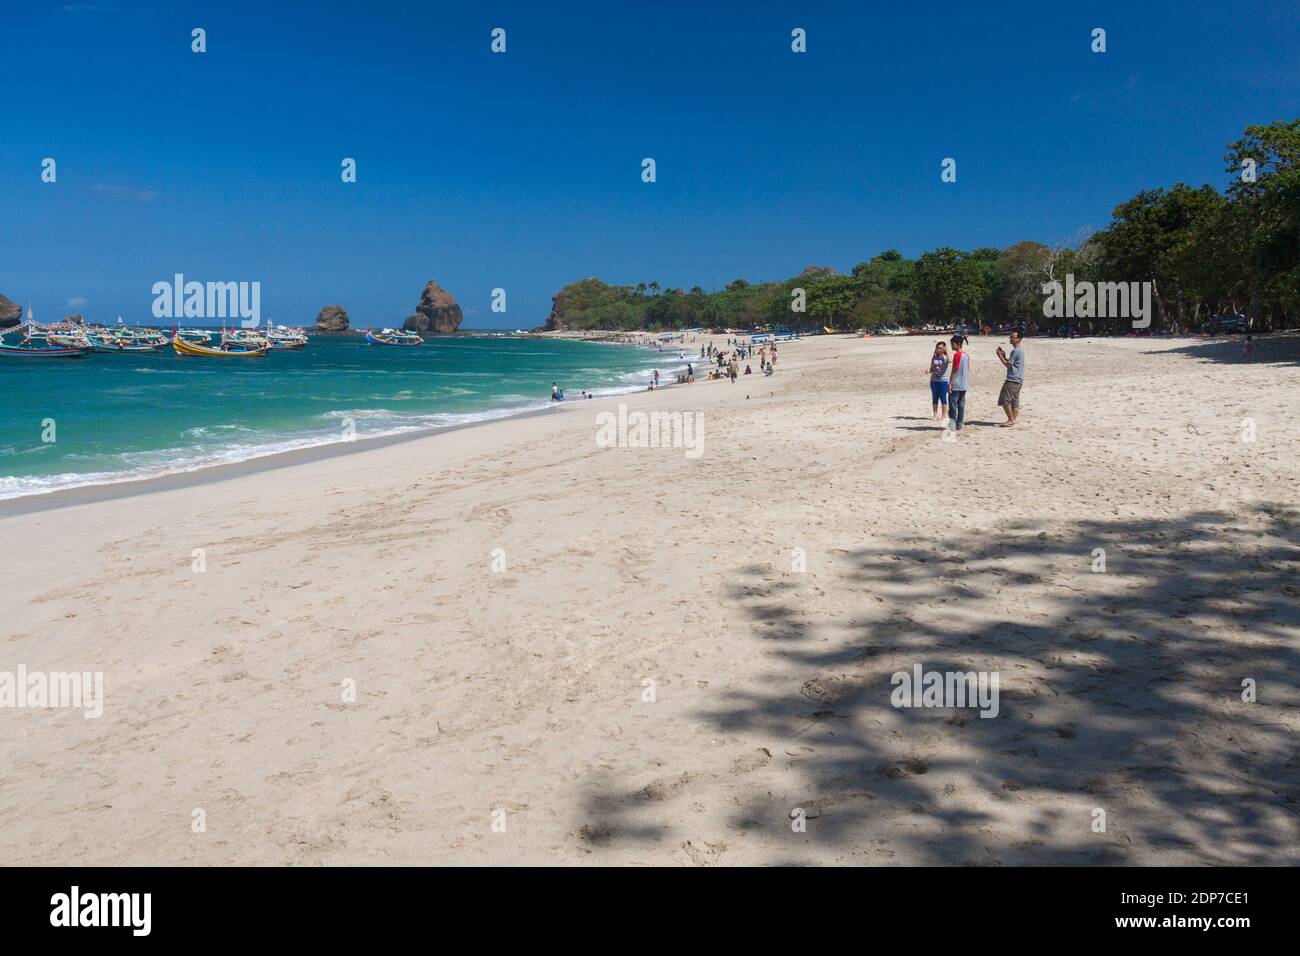 The tourists on Papuma beach, Jember. Stock Photo